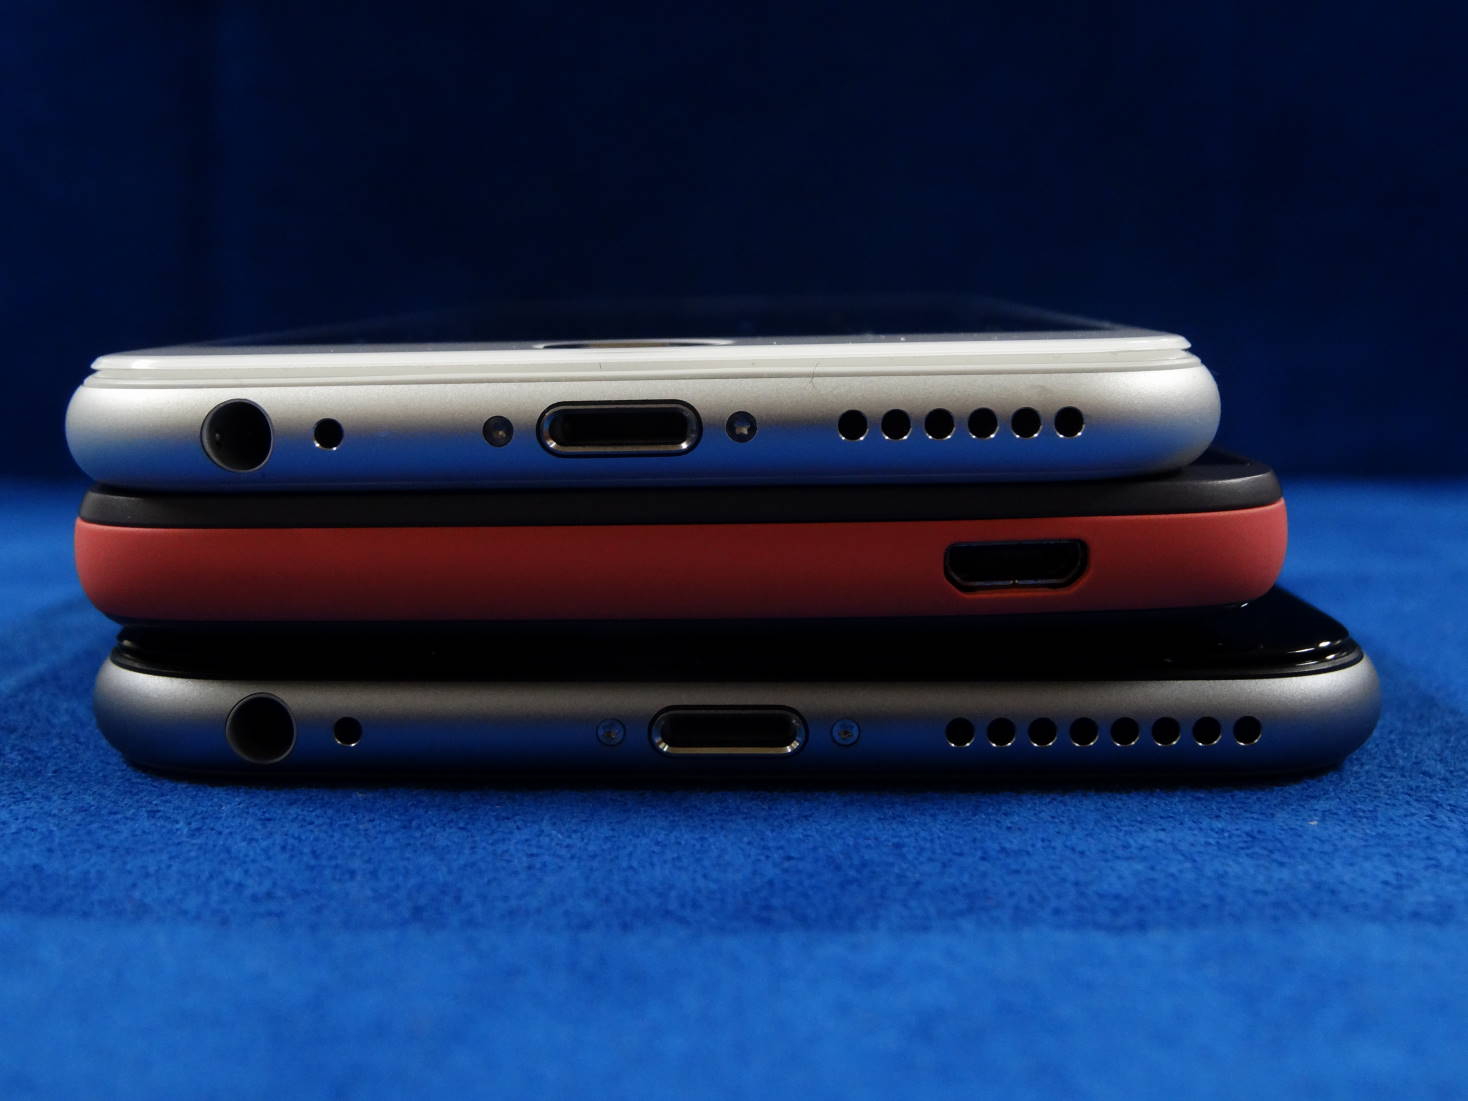 iPhone 6 と HTC Desire 626 と iPhone 6 Plus の横幅比較